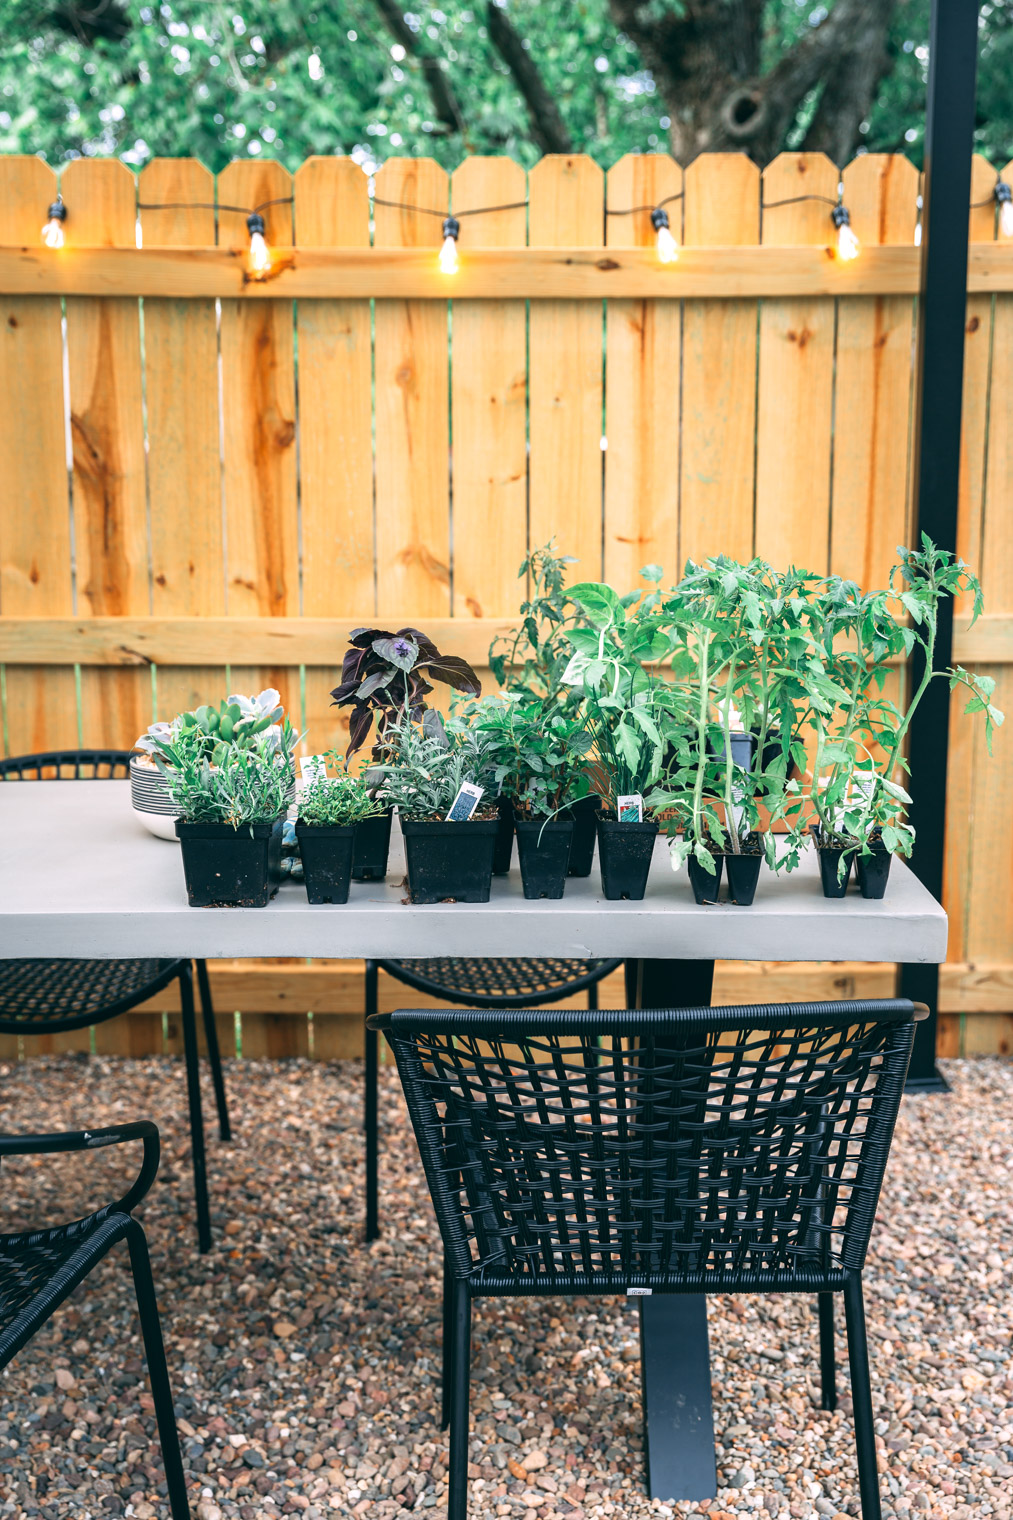 My Tips & Tricks For Planting an Edible Garden